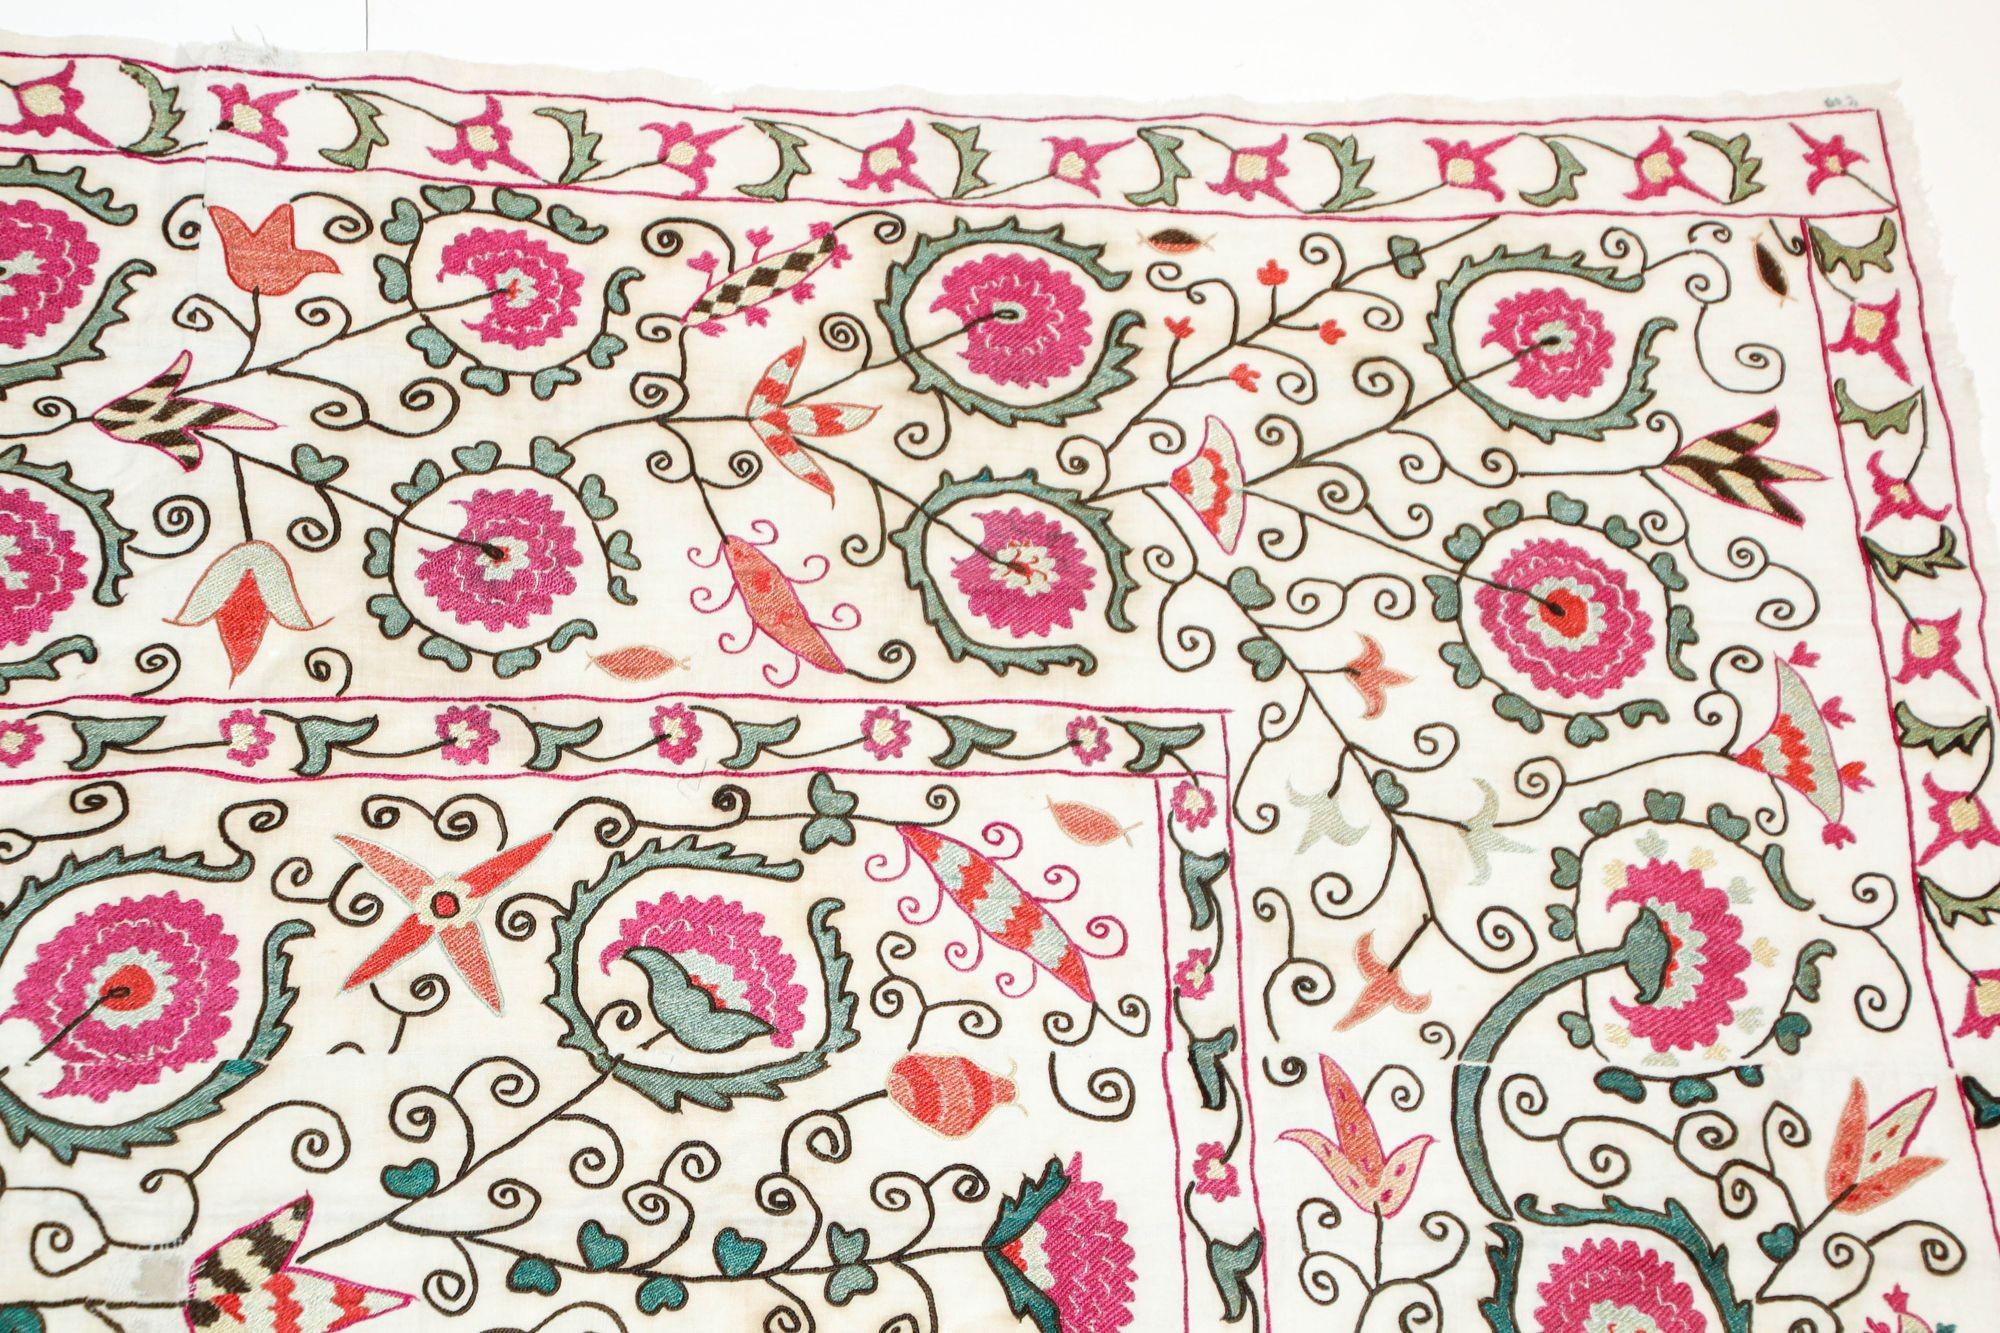 19th C. Suzani Bukhara Uzbekistan Antique Embroidered Islamic Art Textile Susani For Sale 1